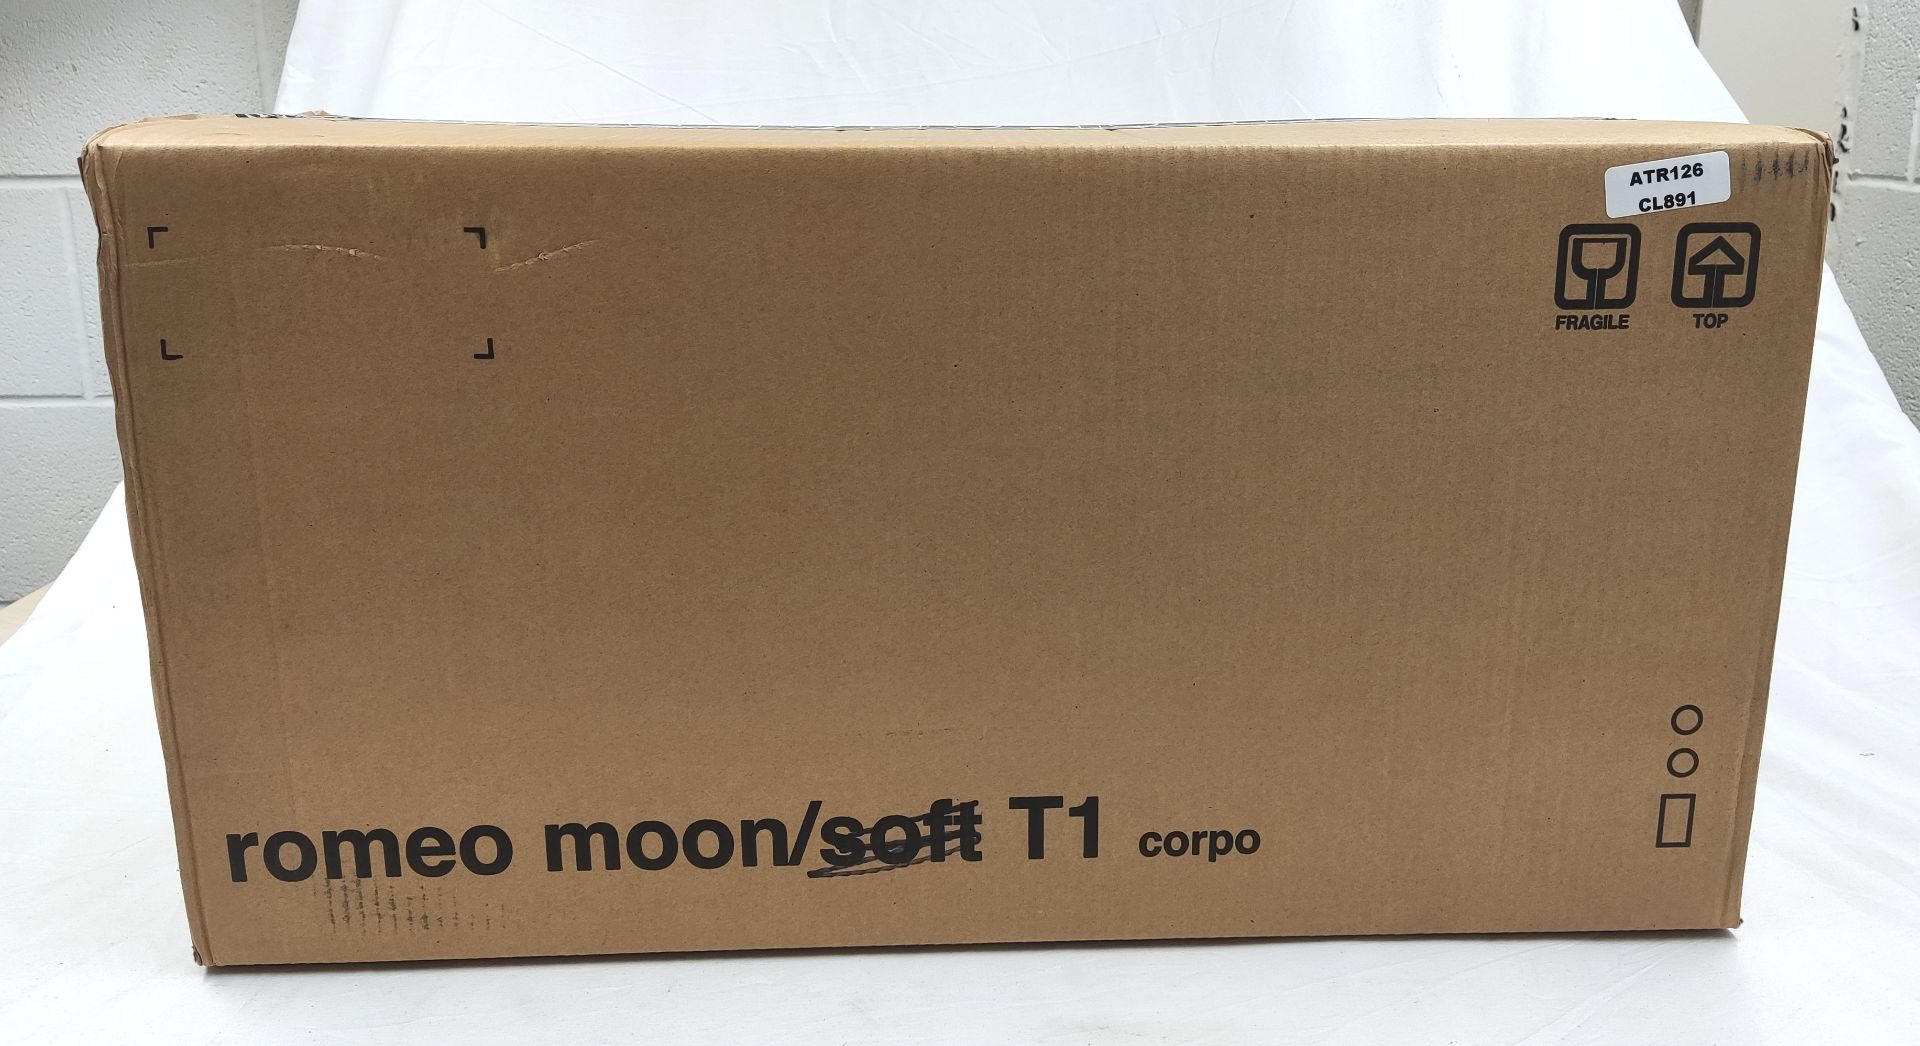 1 x FLOS Romeo Moon T1 Table Lamp In Grey - 665mm Tall - RRP £750 - Ref: ATR126/ATR122/ATRPA - - Image 11 of 11